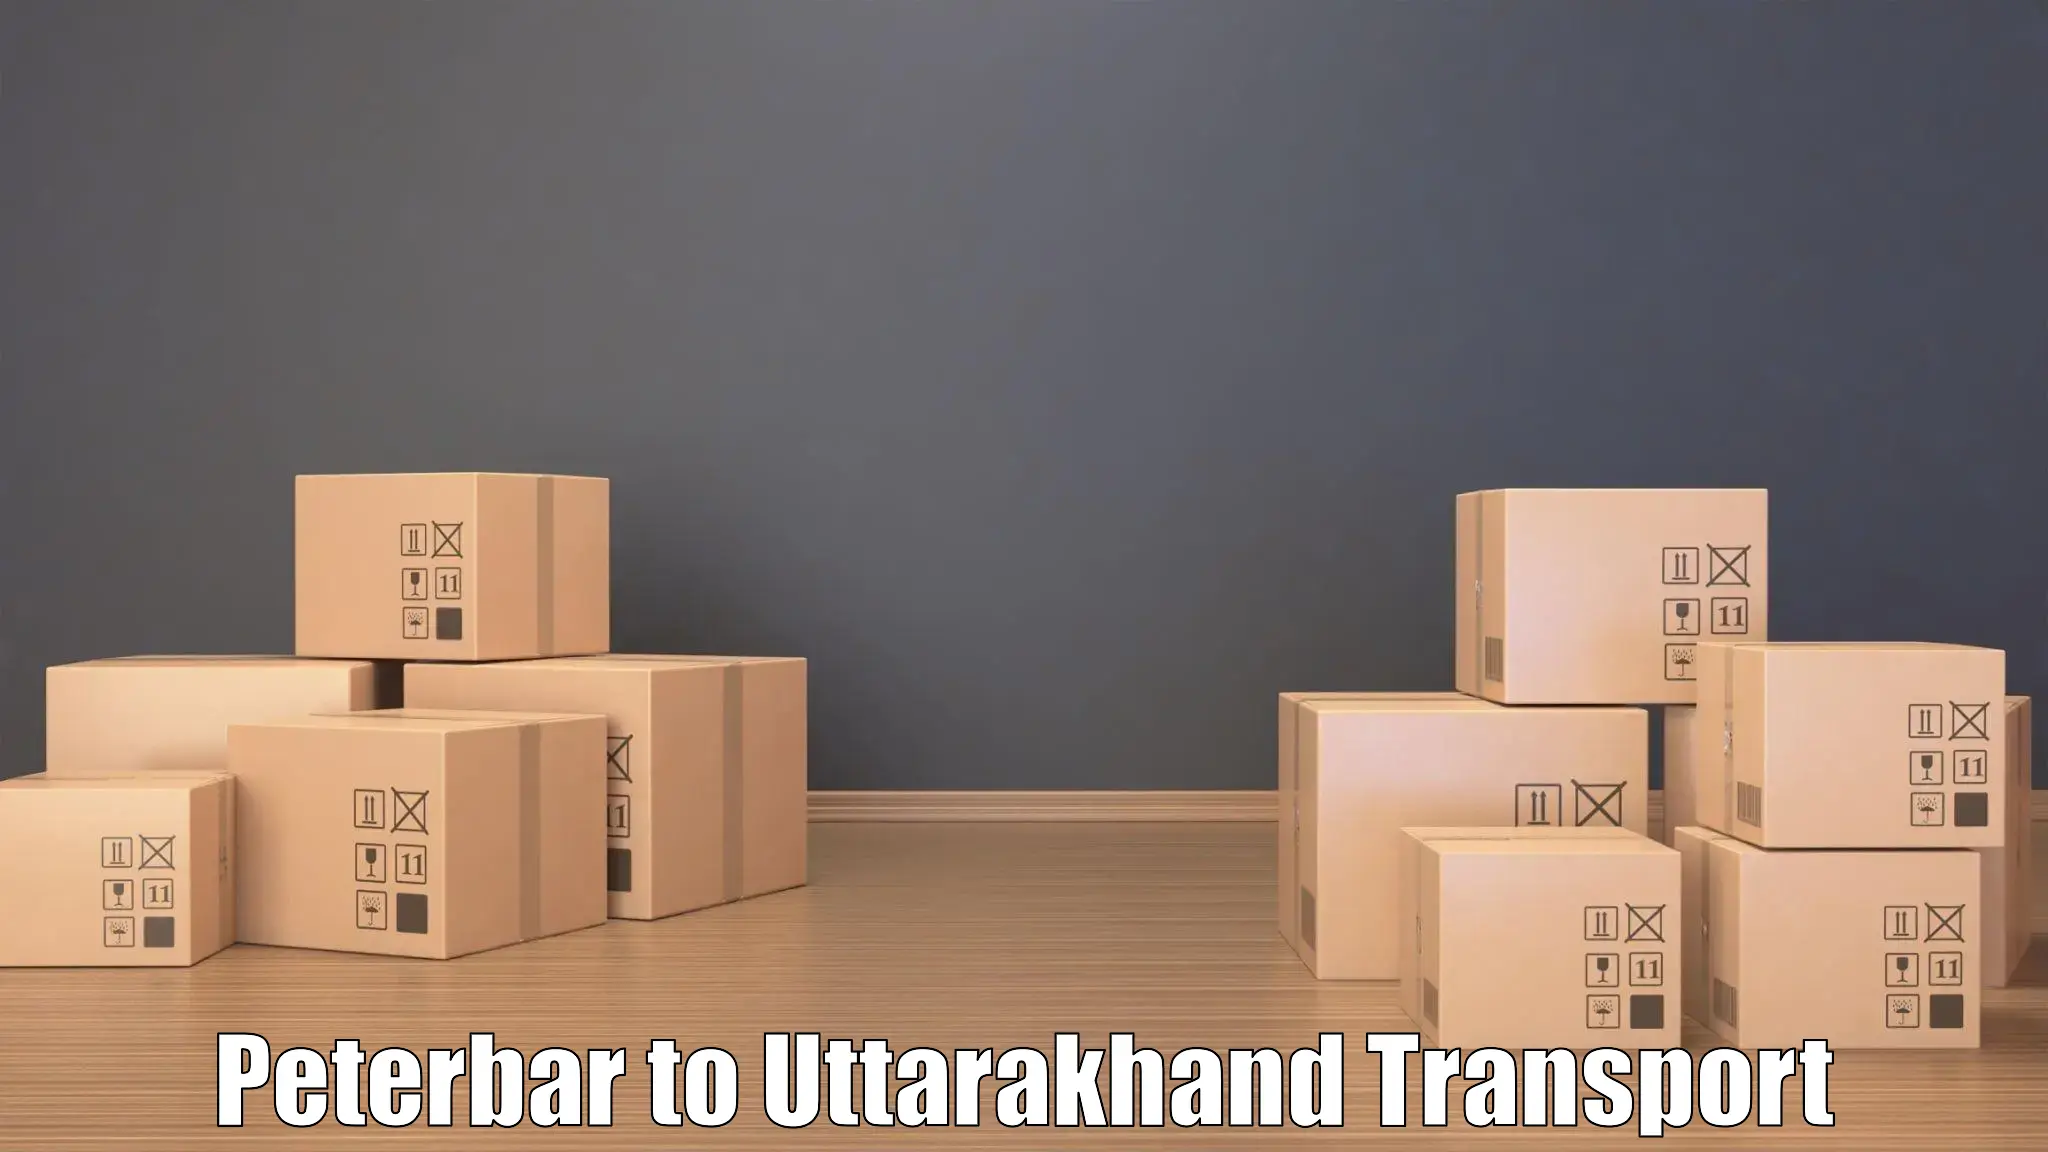 Cargo train transport services Peterbar to Rishikesh